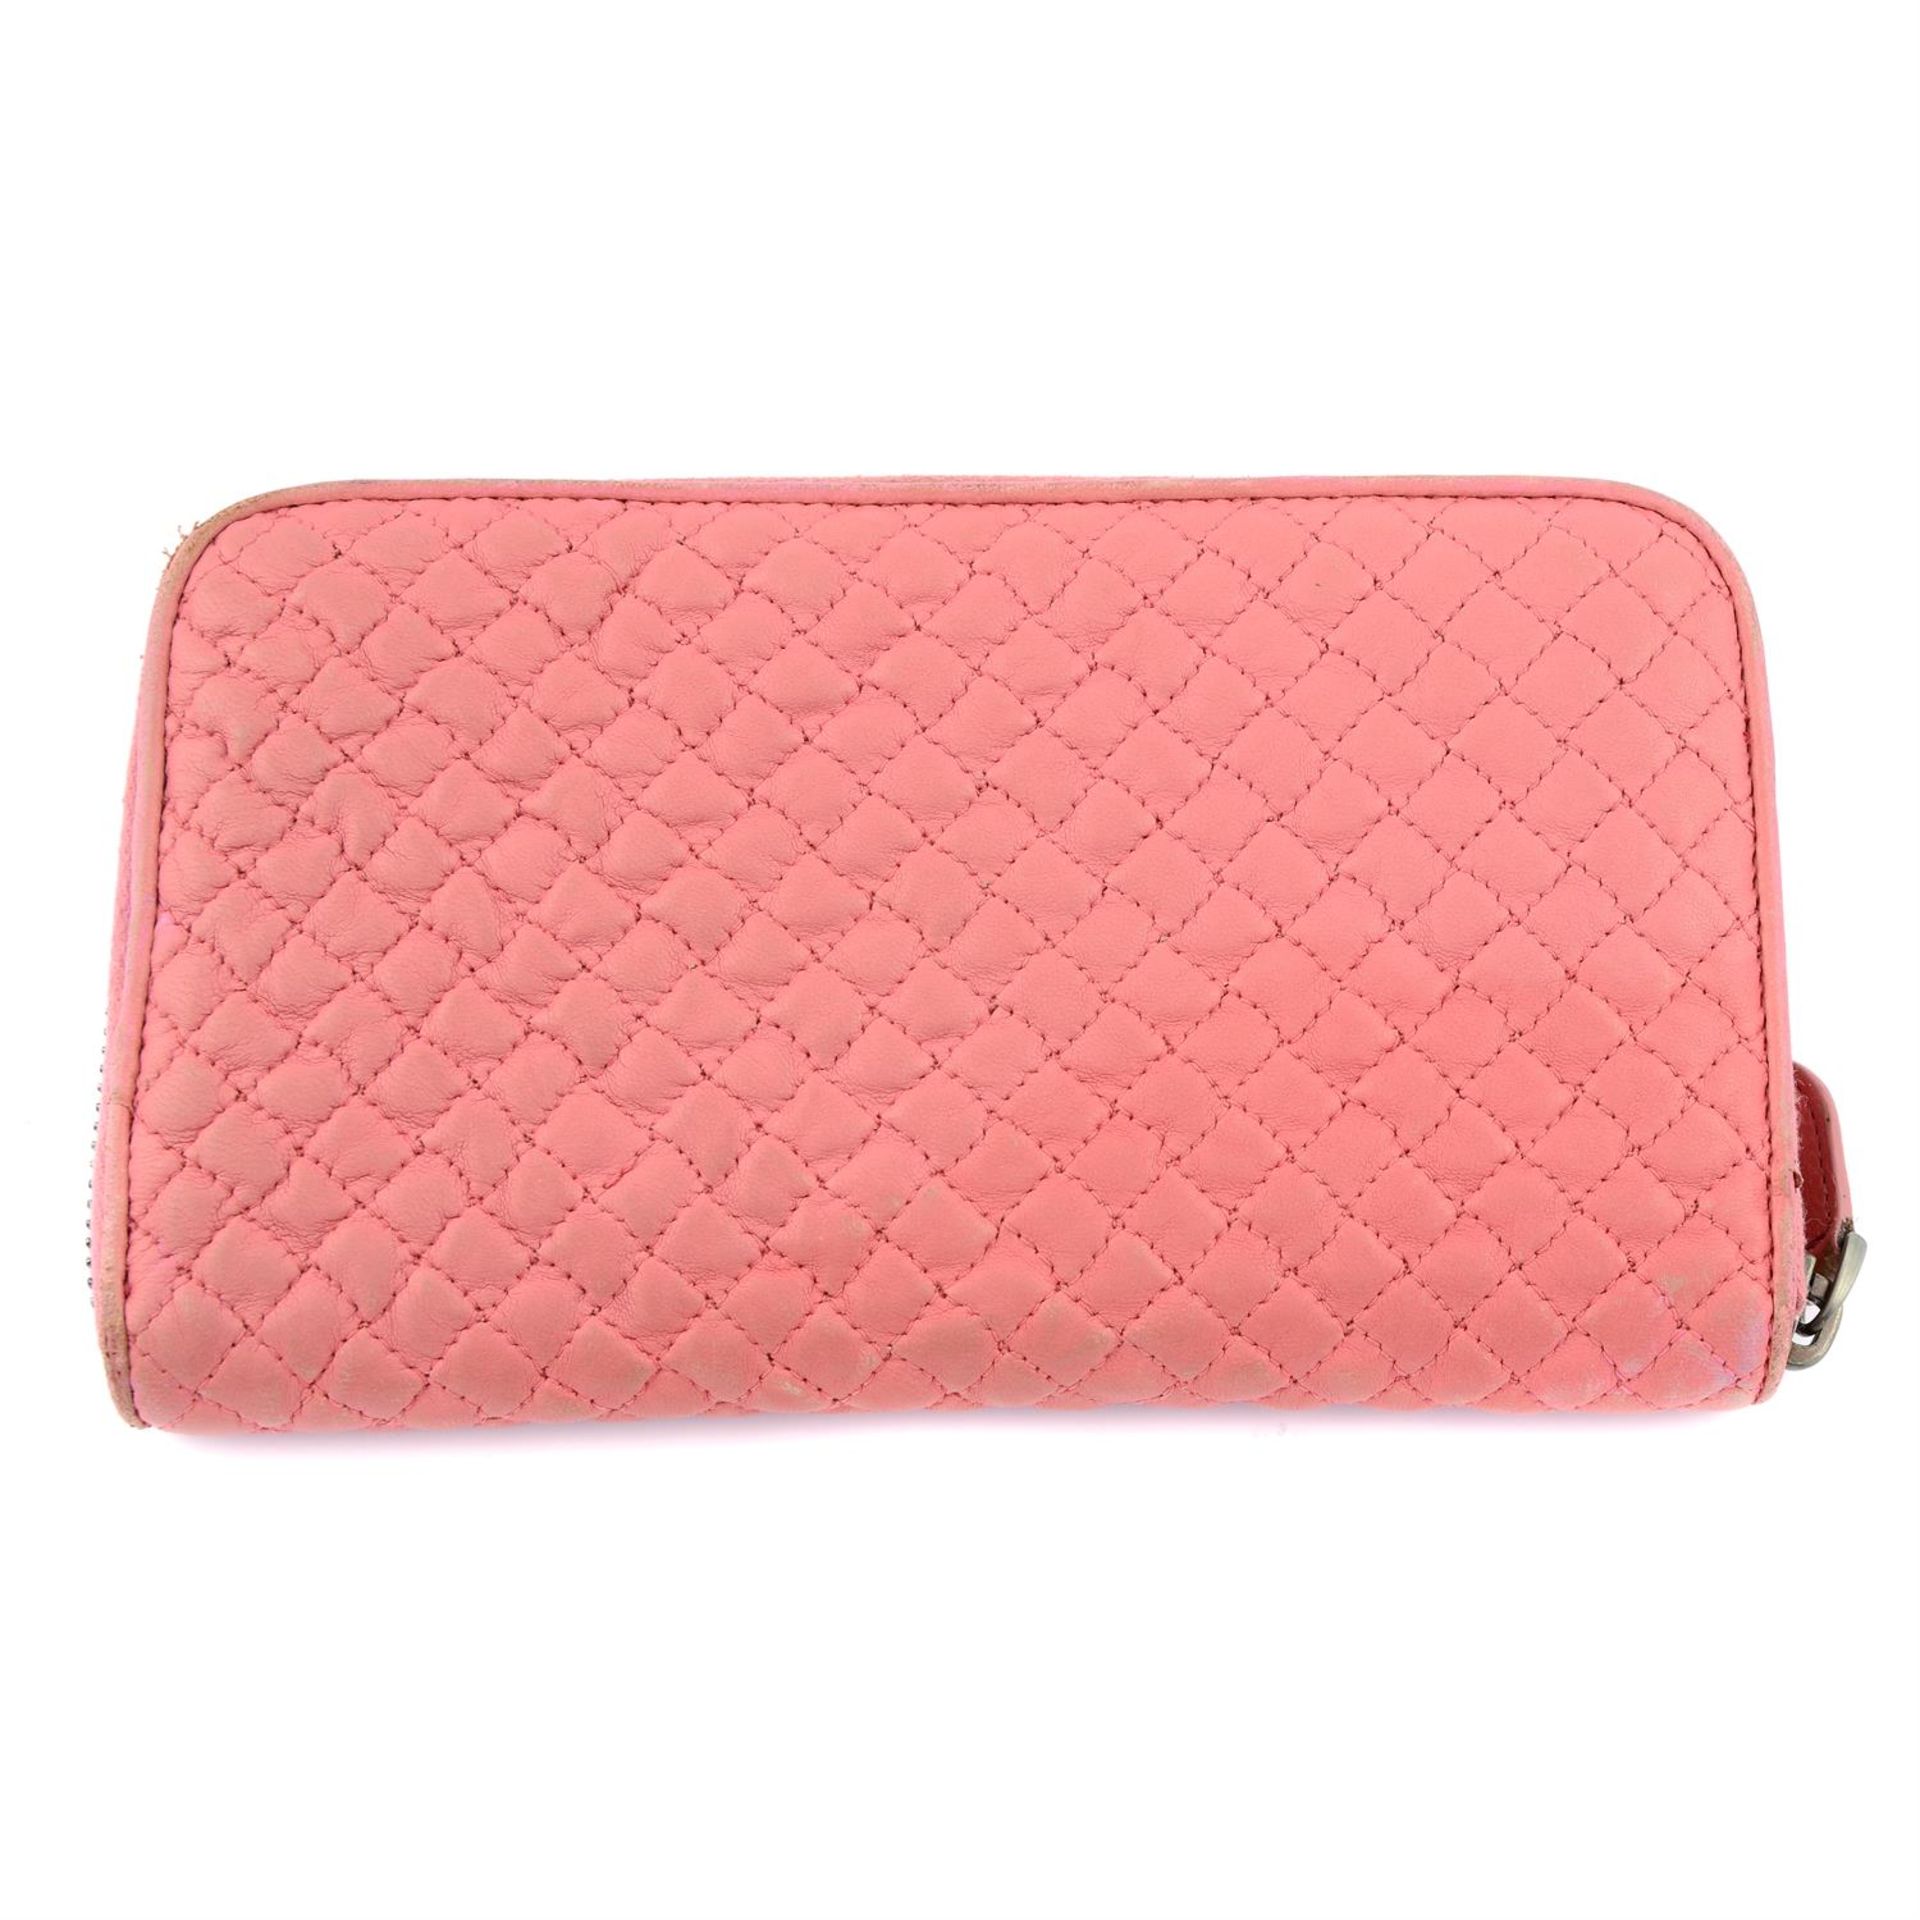 BOTTEGA VENETA - a pink leather wallet. - Image 2 of 4